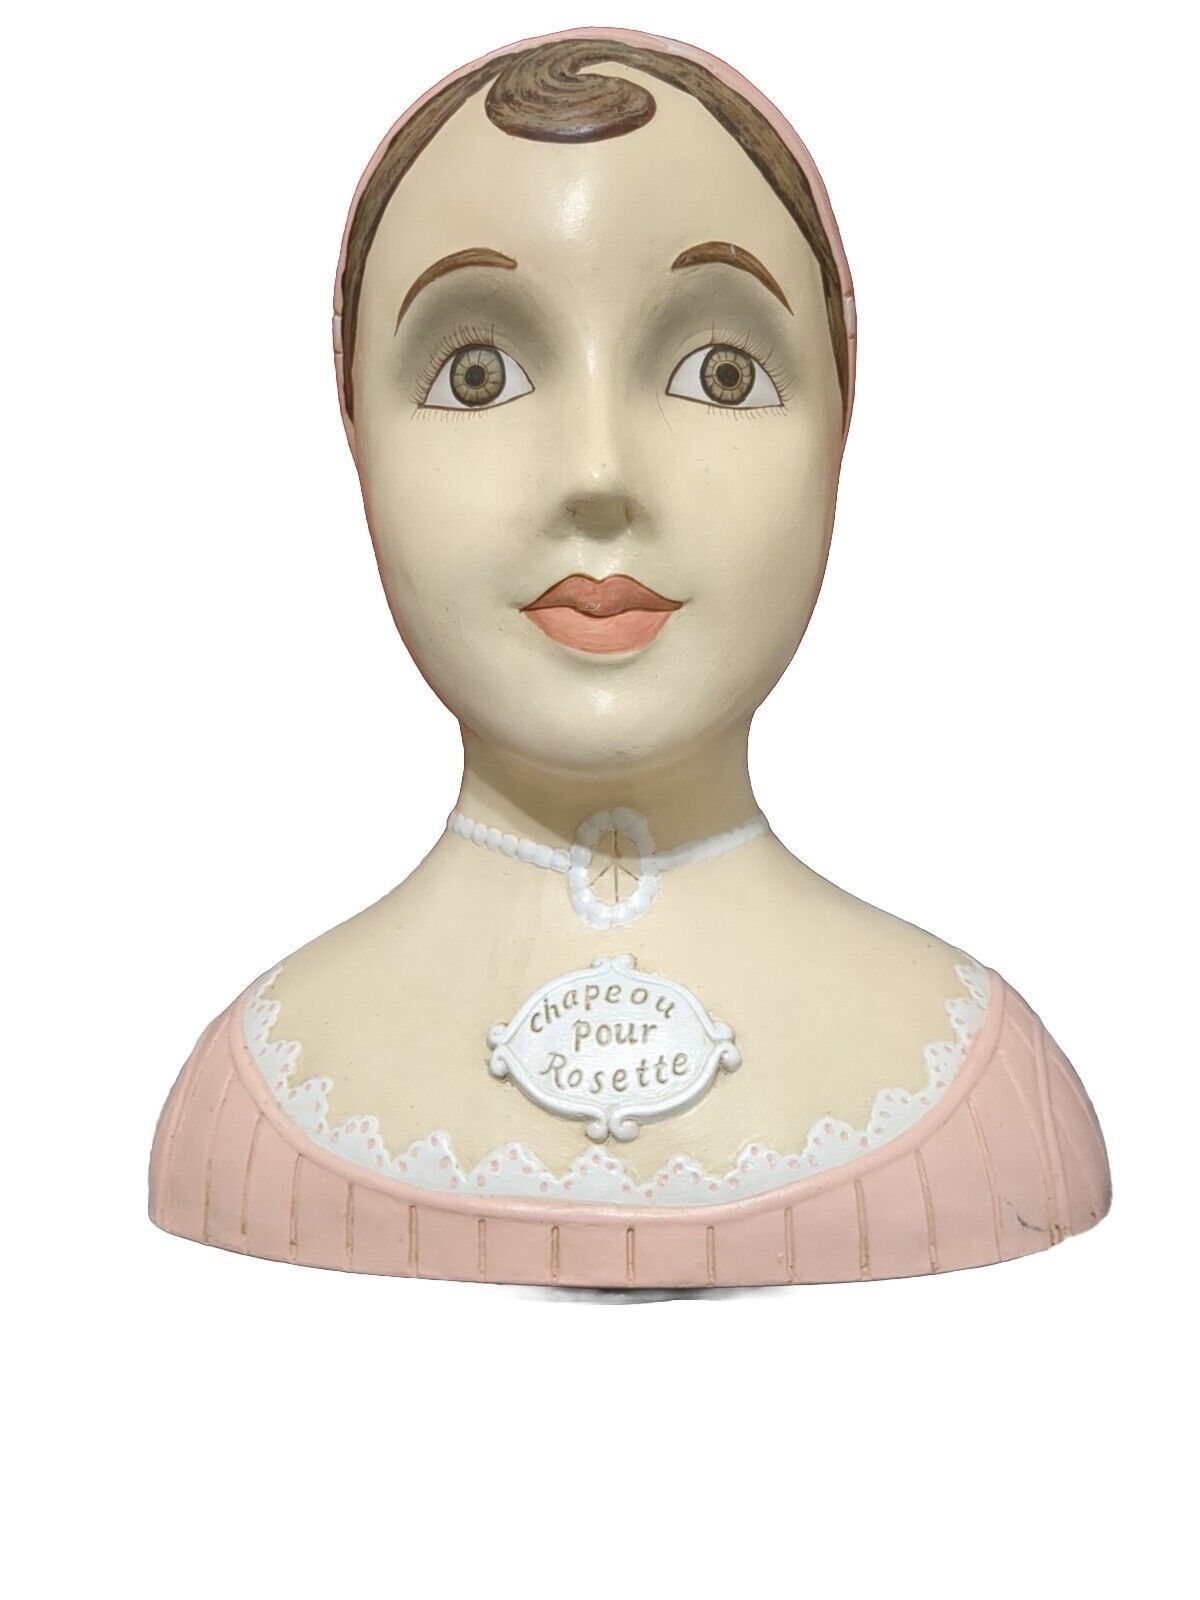 Vintage Mannequin Head Hat Wig Display Chapeou pour Rosette Hand Painted Flapper